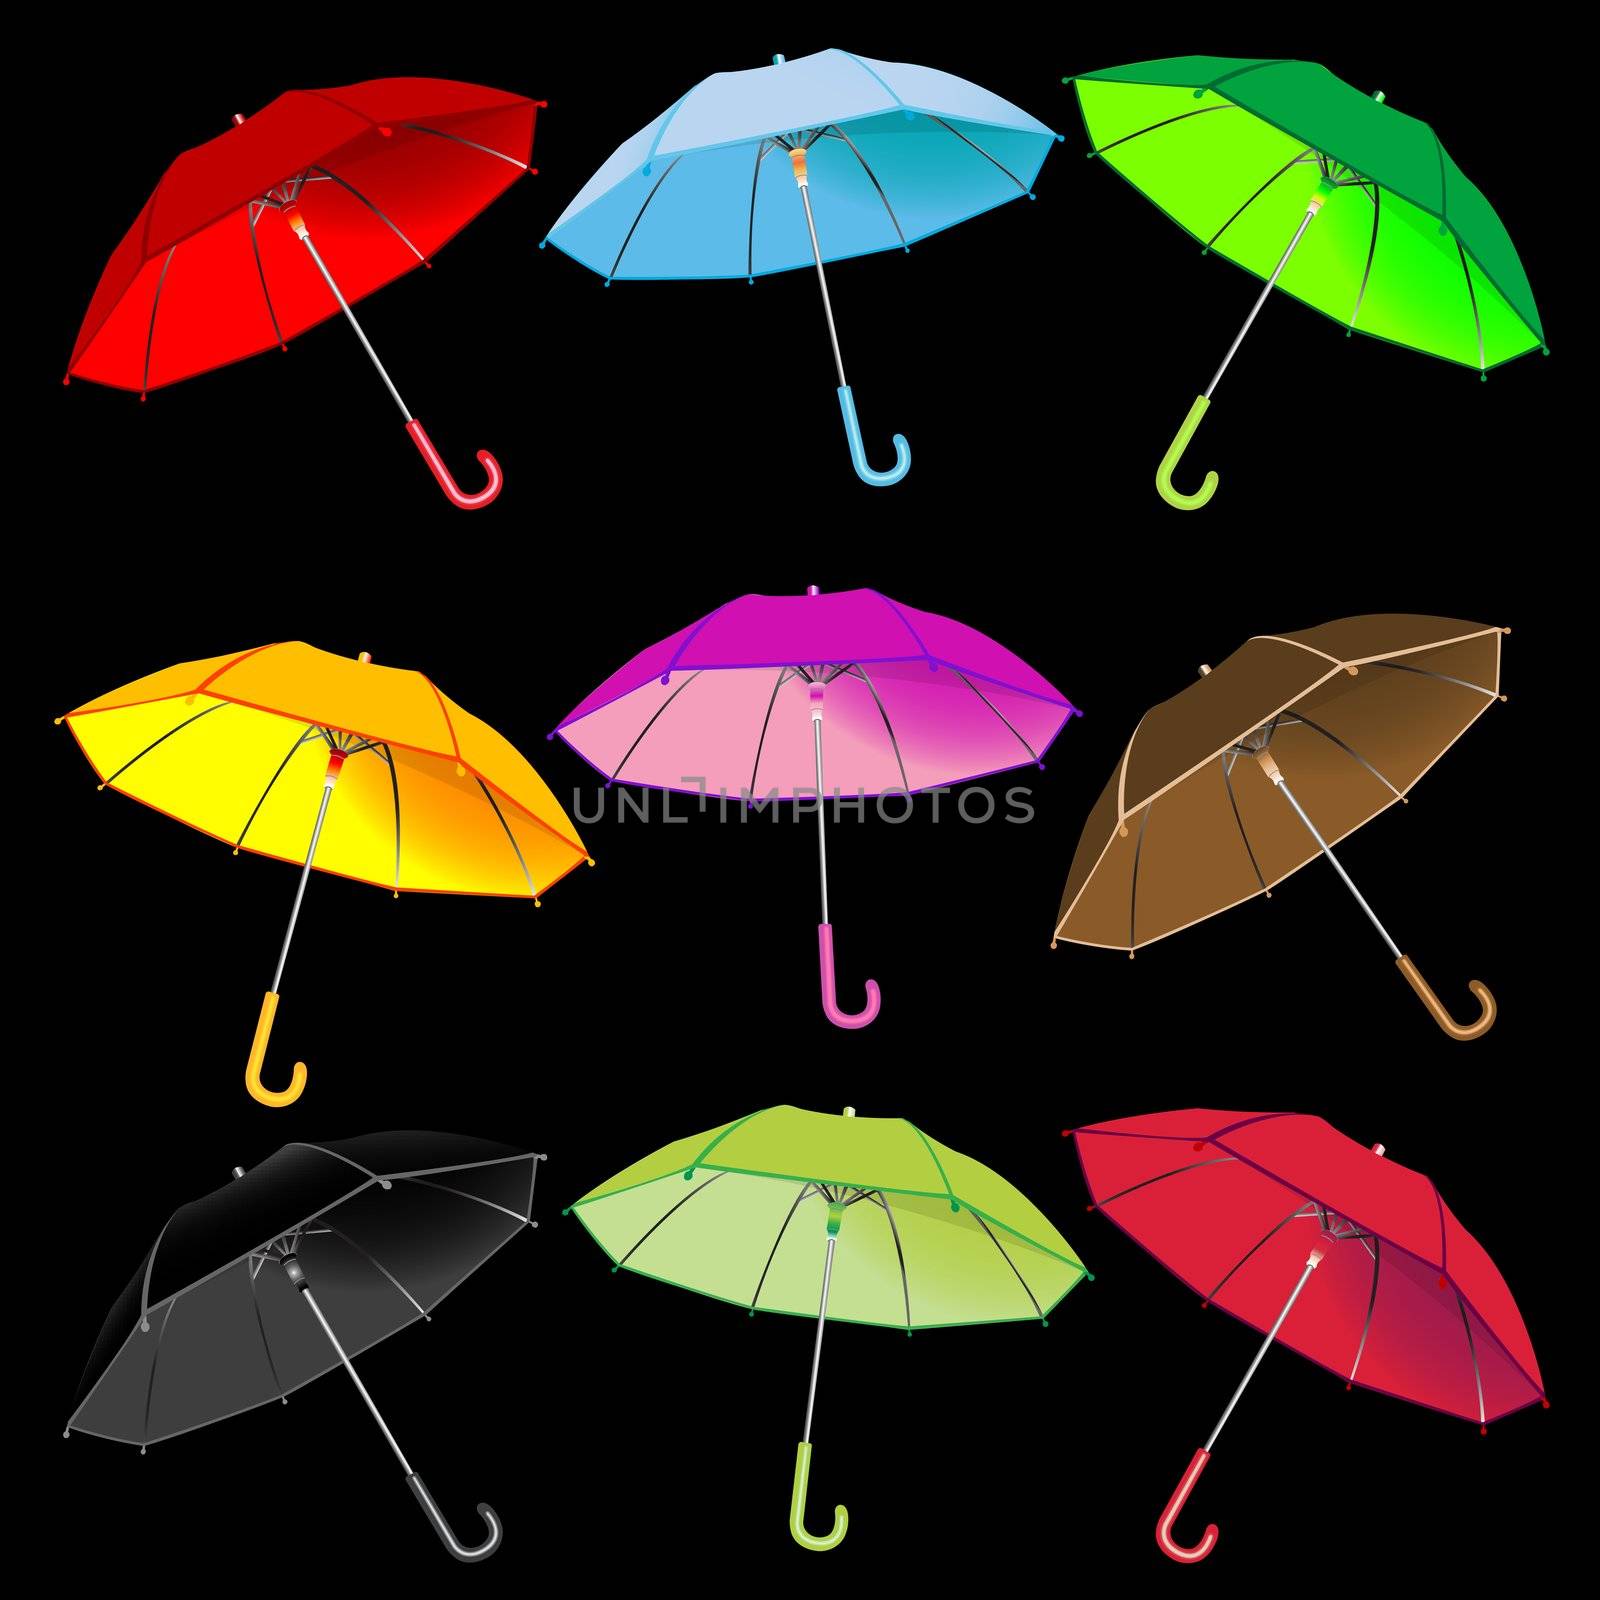 umbrellas collection against black by robertosch